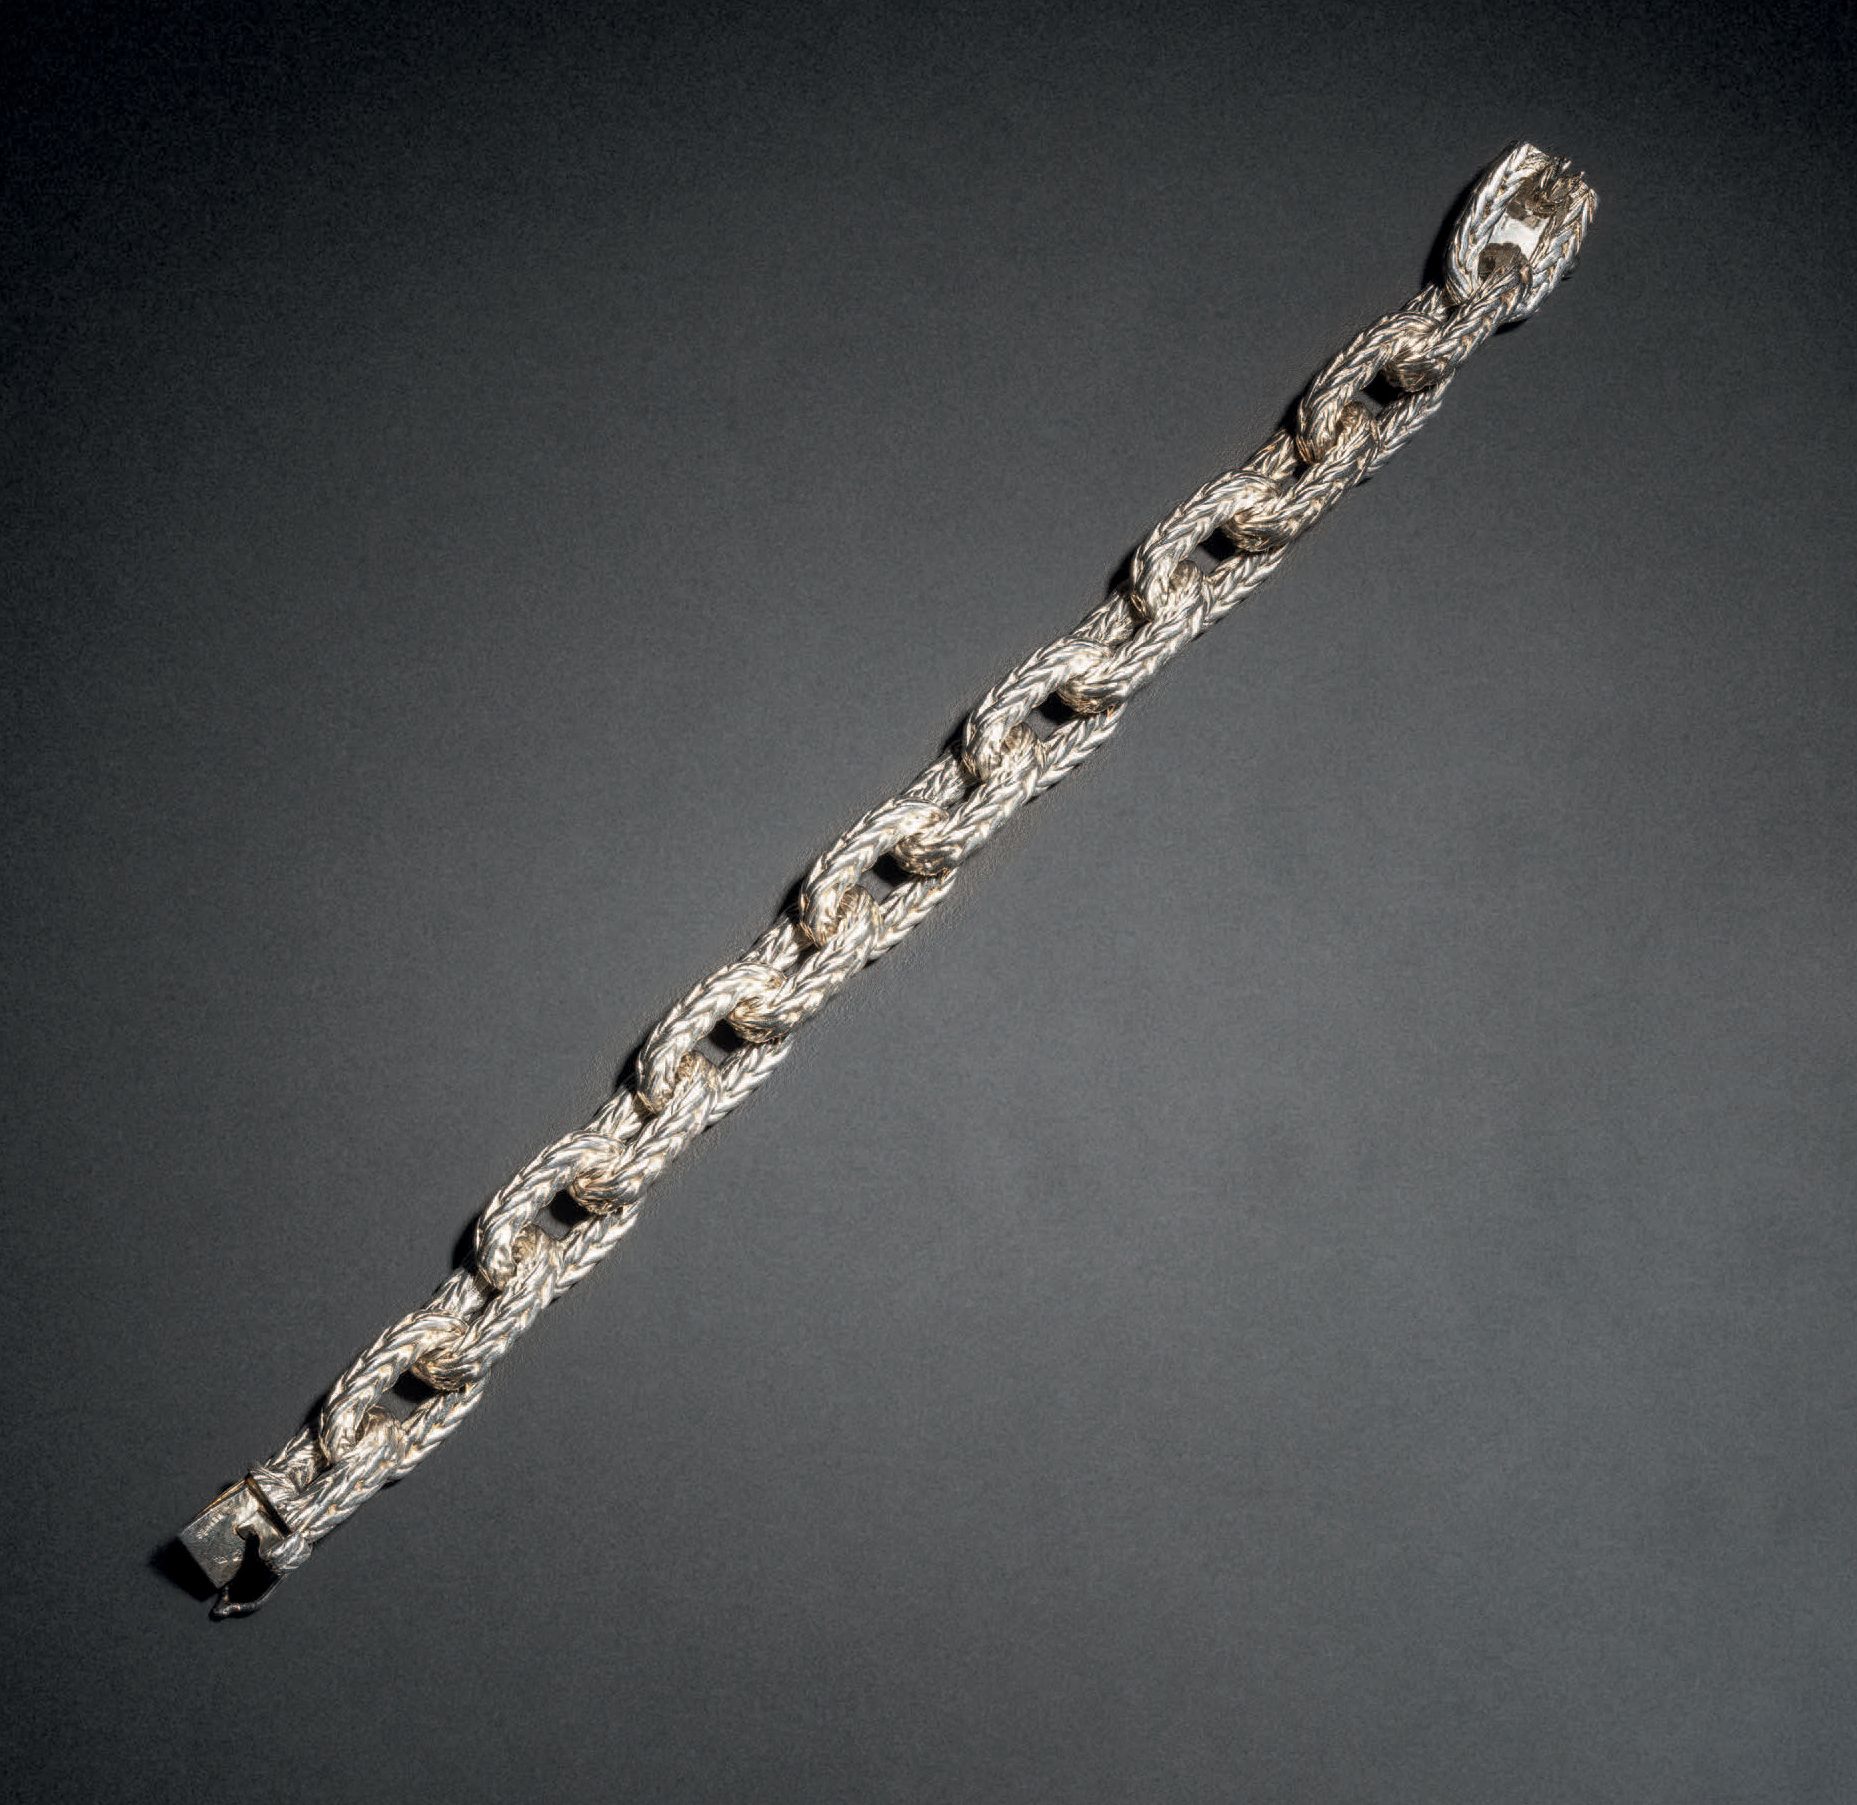 HERMES Bracelet ink chain marine mesh silver braided 925 ° / ° °
Signed
Weight: &hellip;